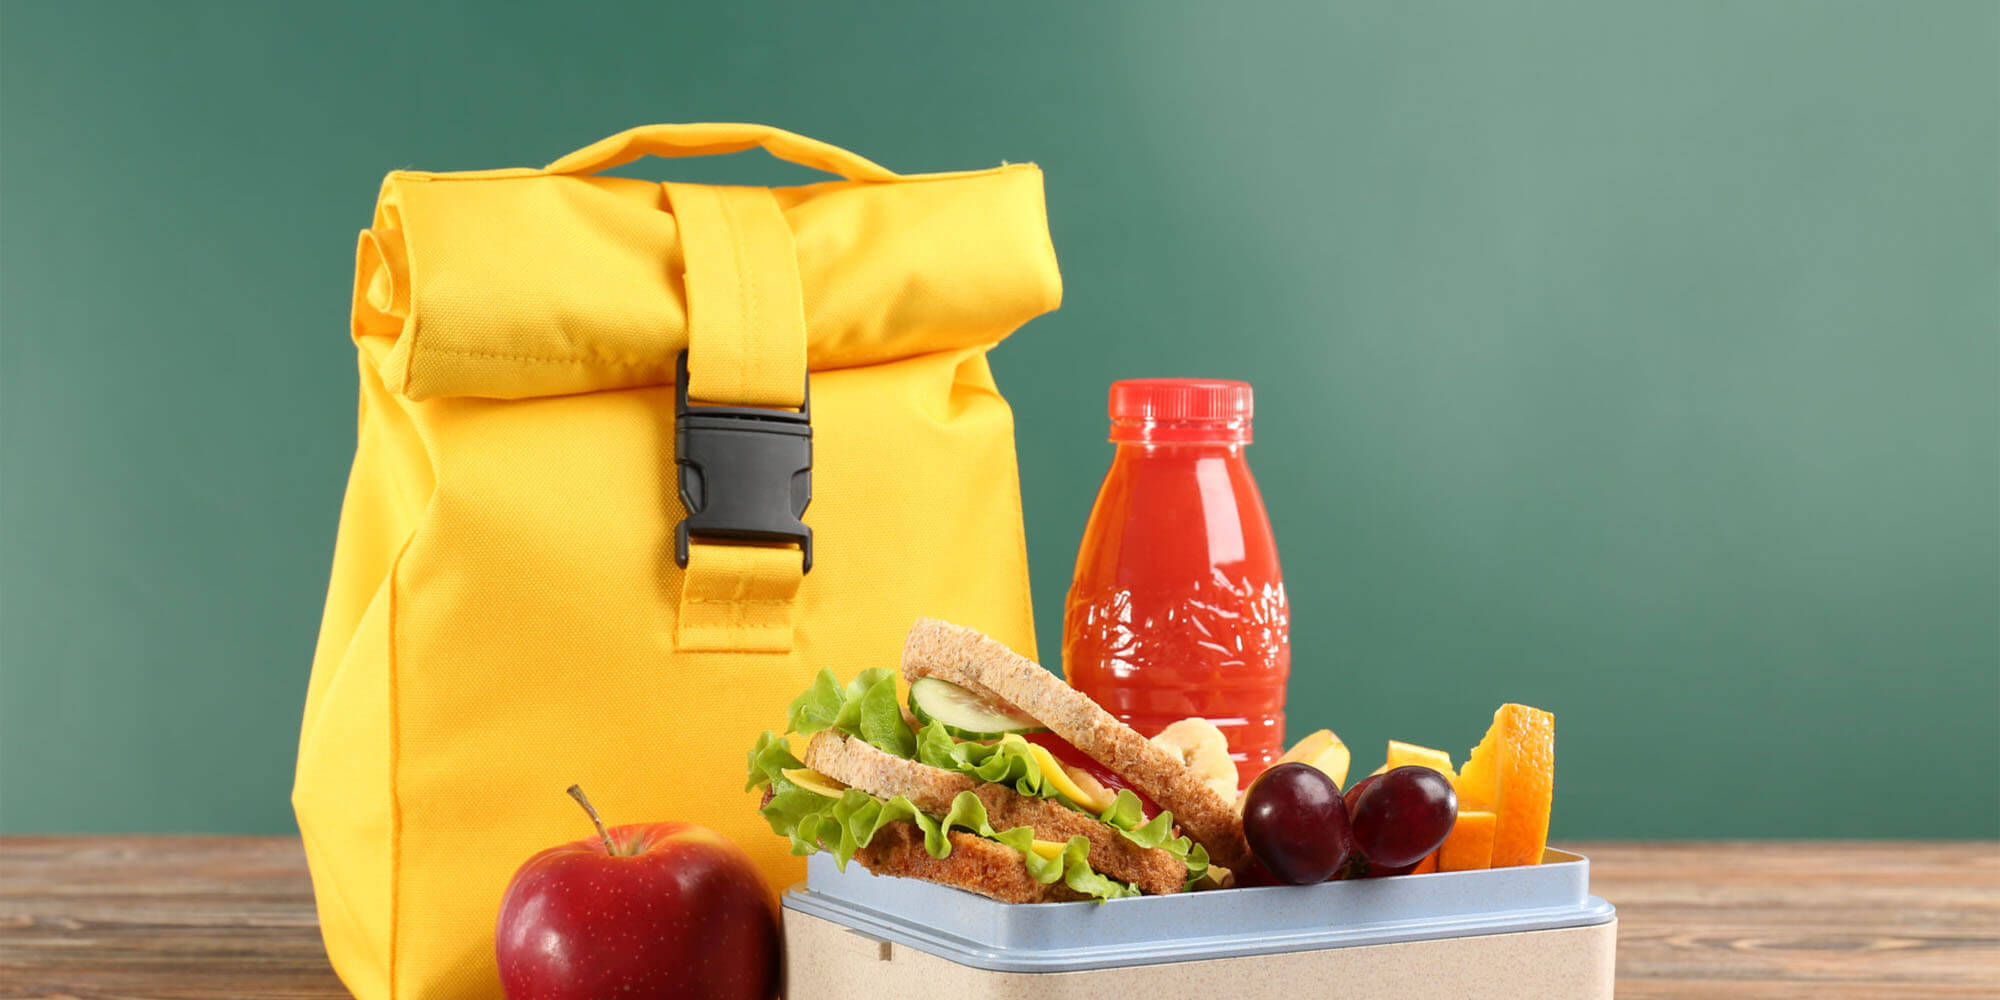 Lunch bag bon appétit, lunch box, sac isotherme repas midi